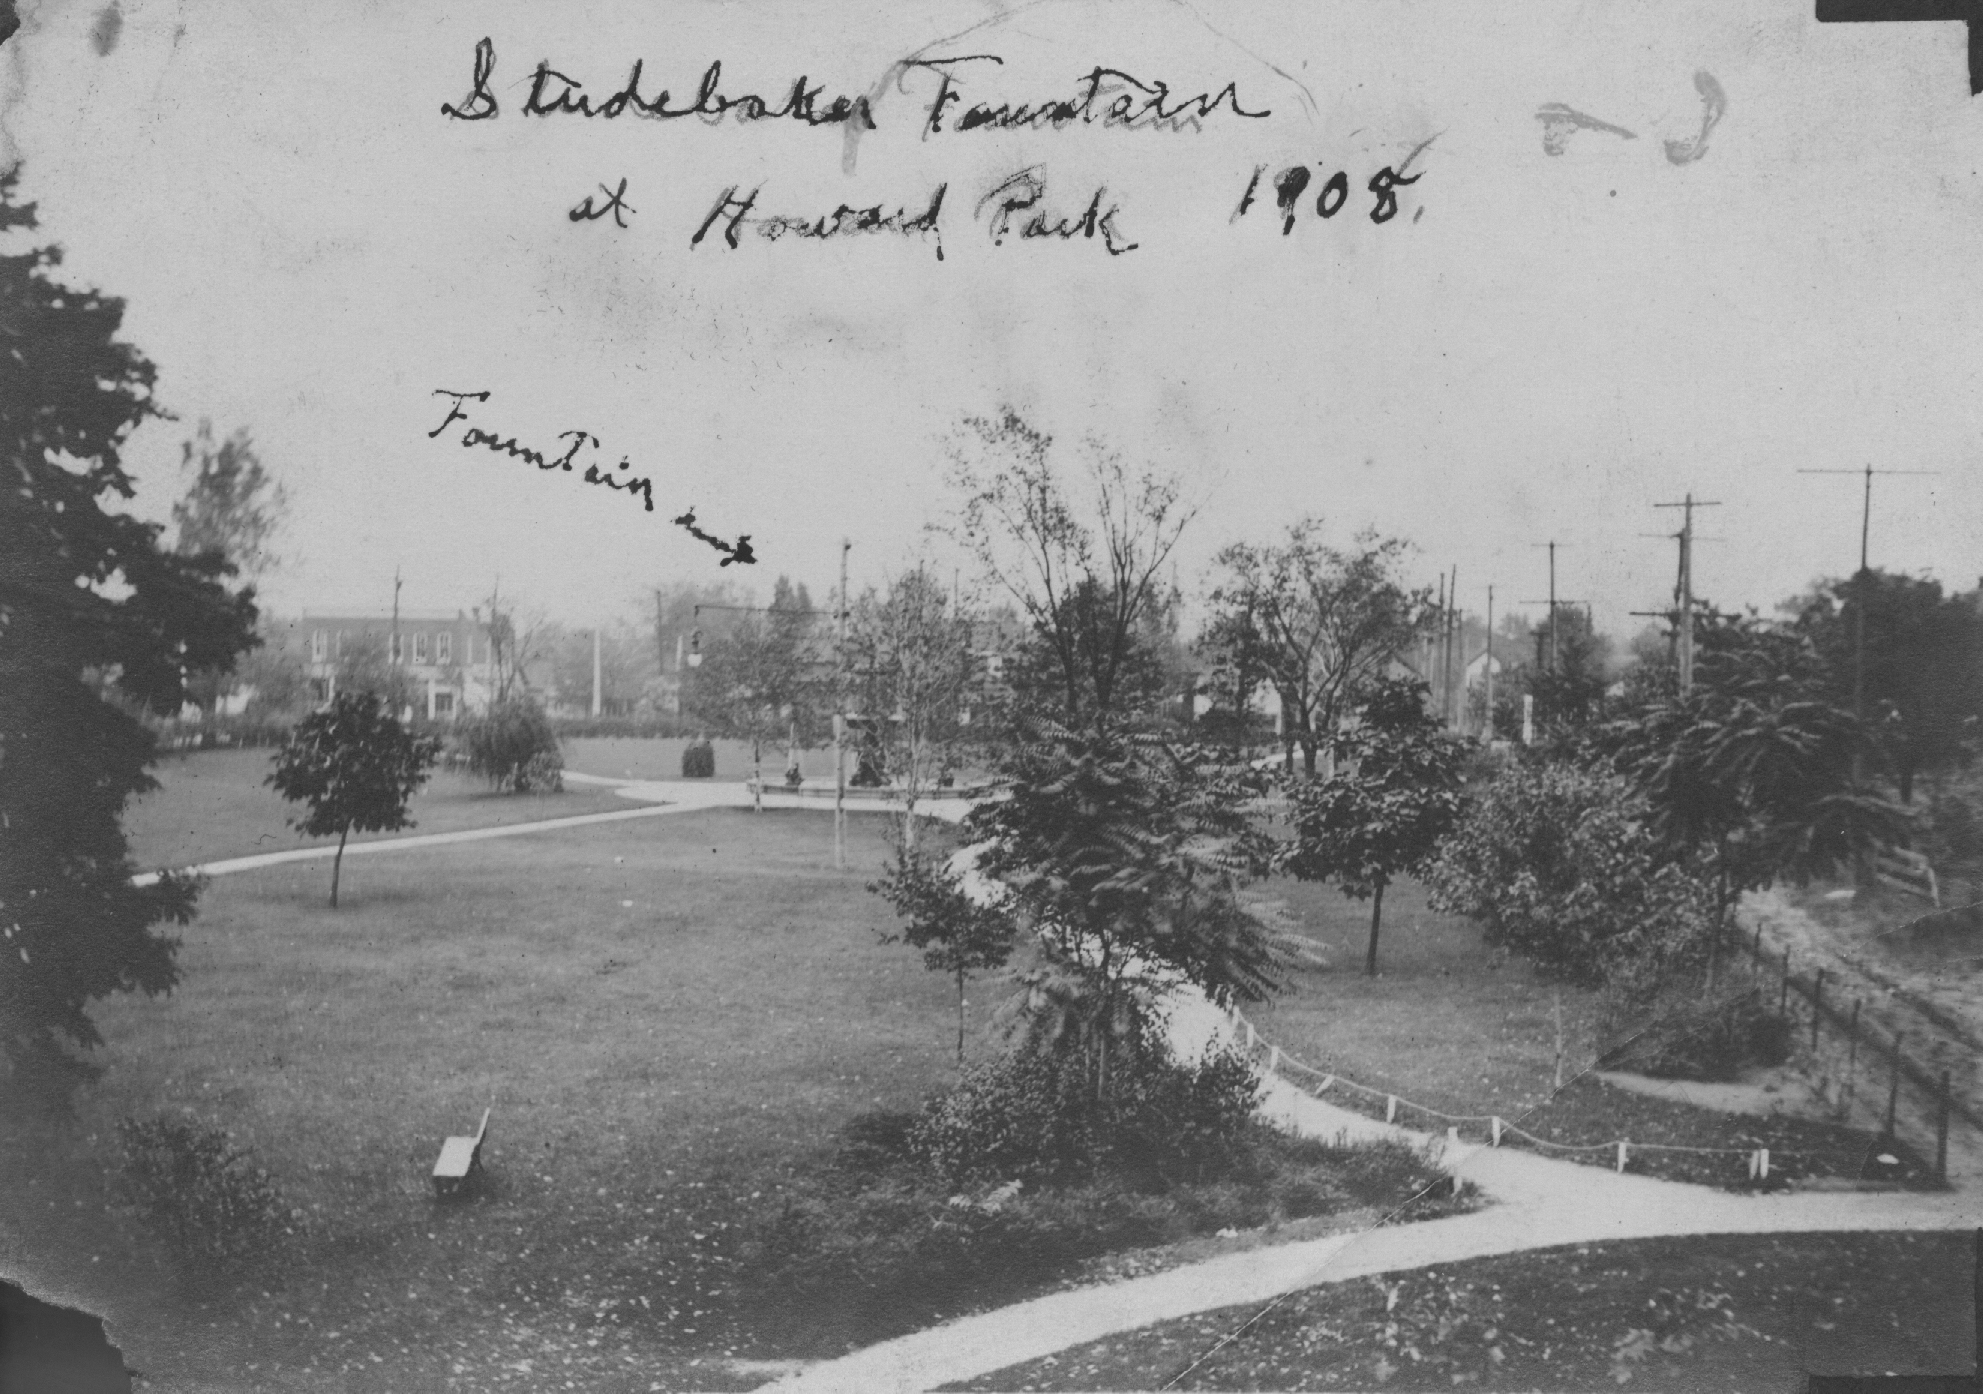 Studebaker Electric Fountain in Howard Park 1908